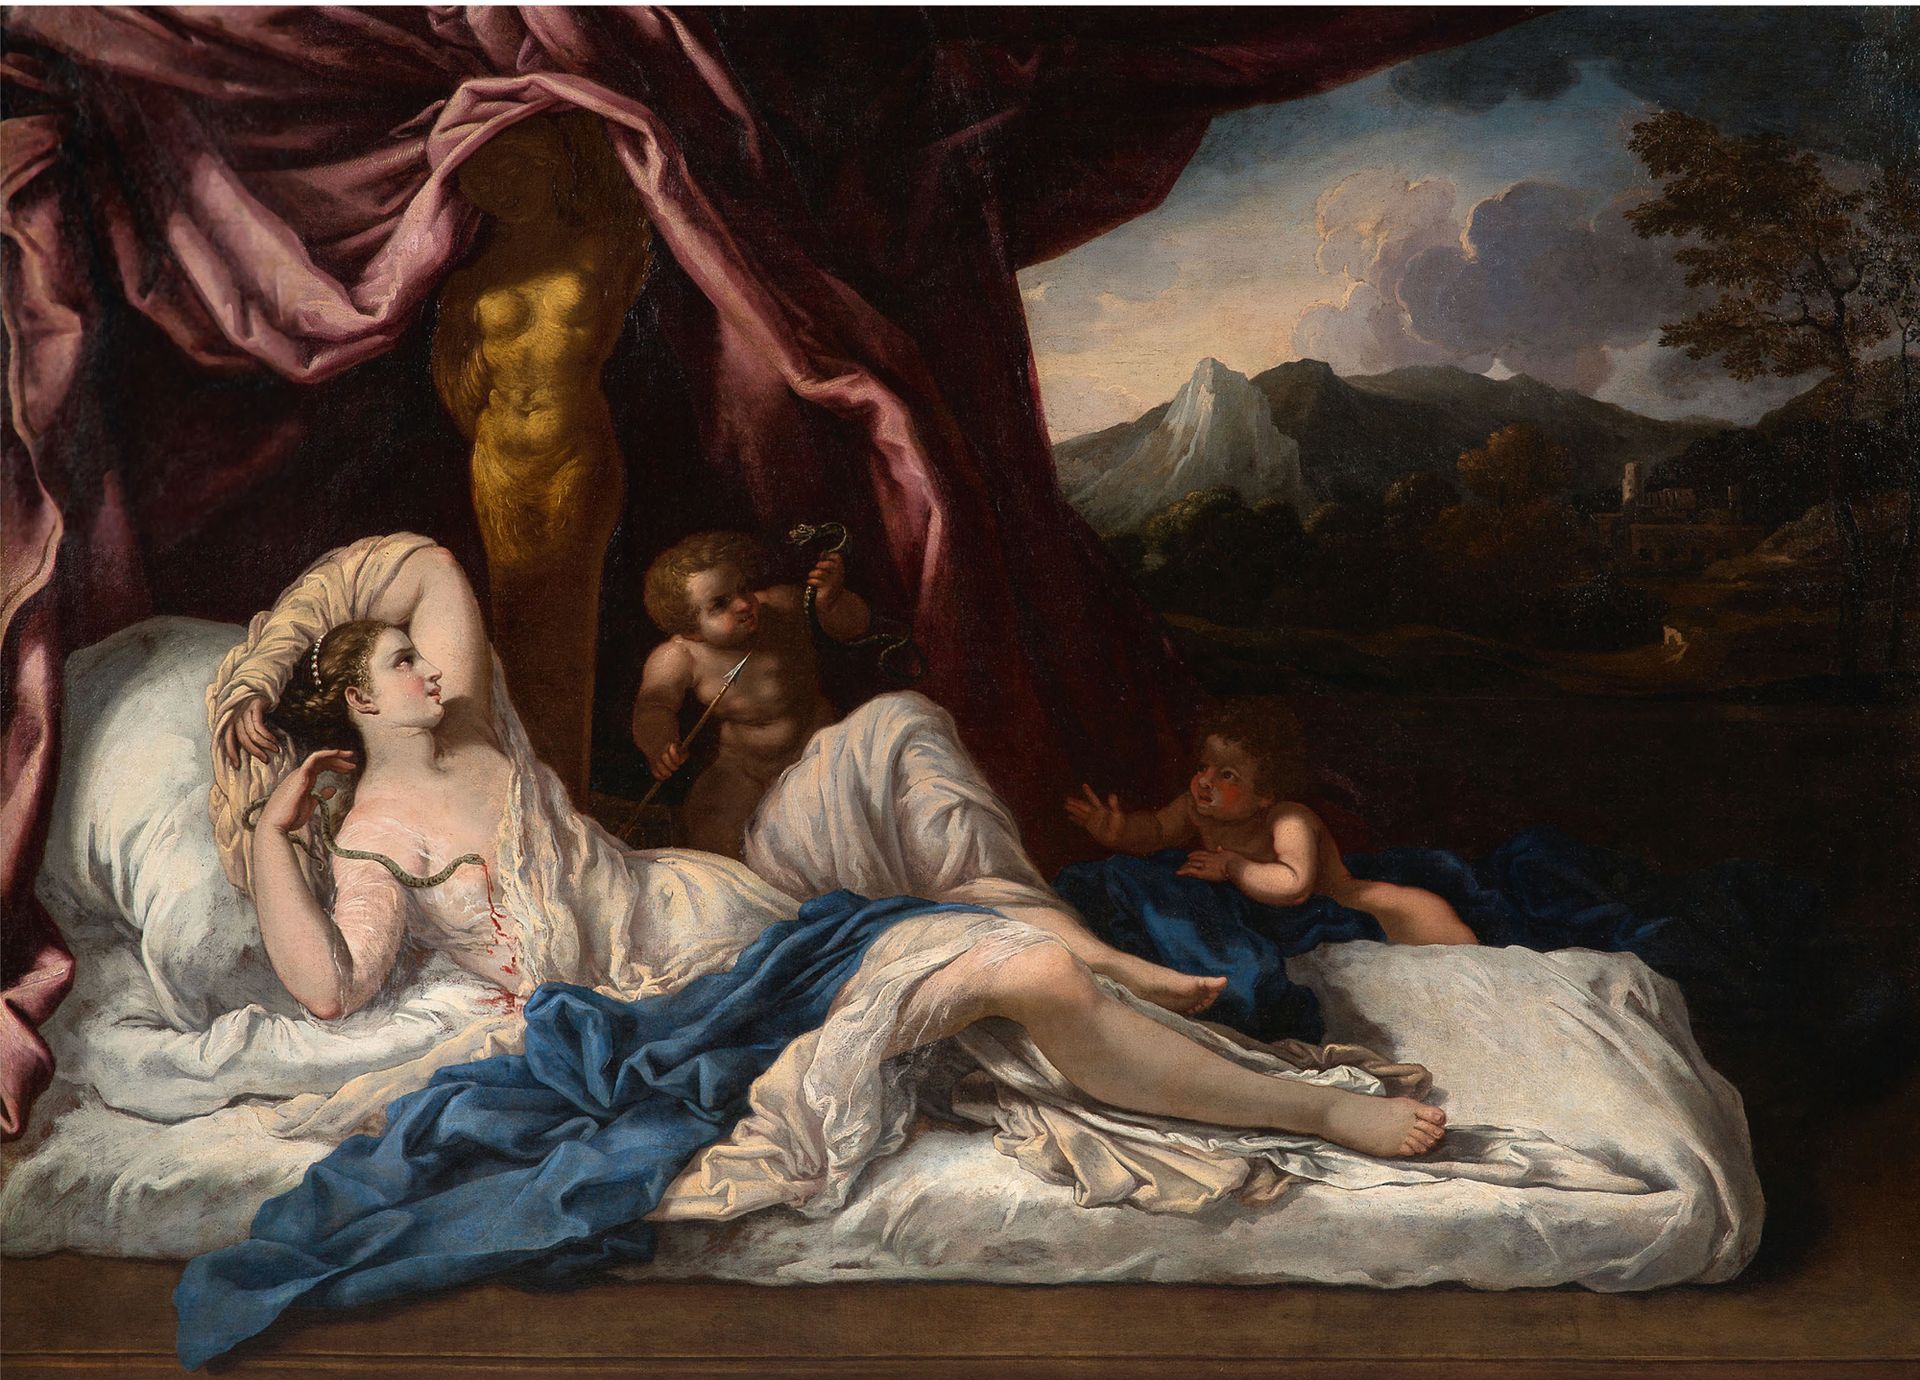 ÉCOLE ITALIENNE DU XVIIe SIÈCLE La morte di Cleopatra
Olio su tela
124 x 173 cm